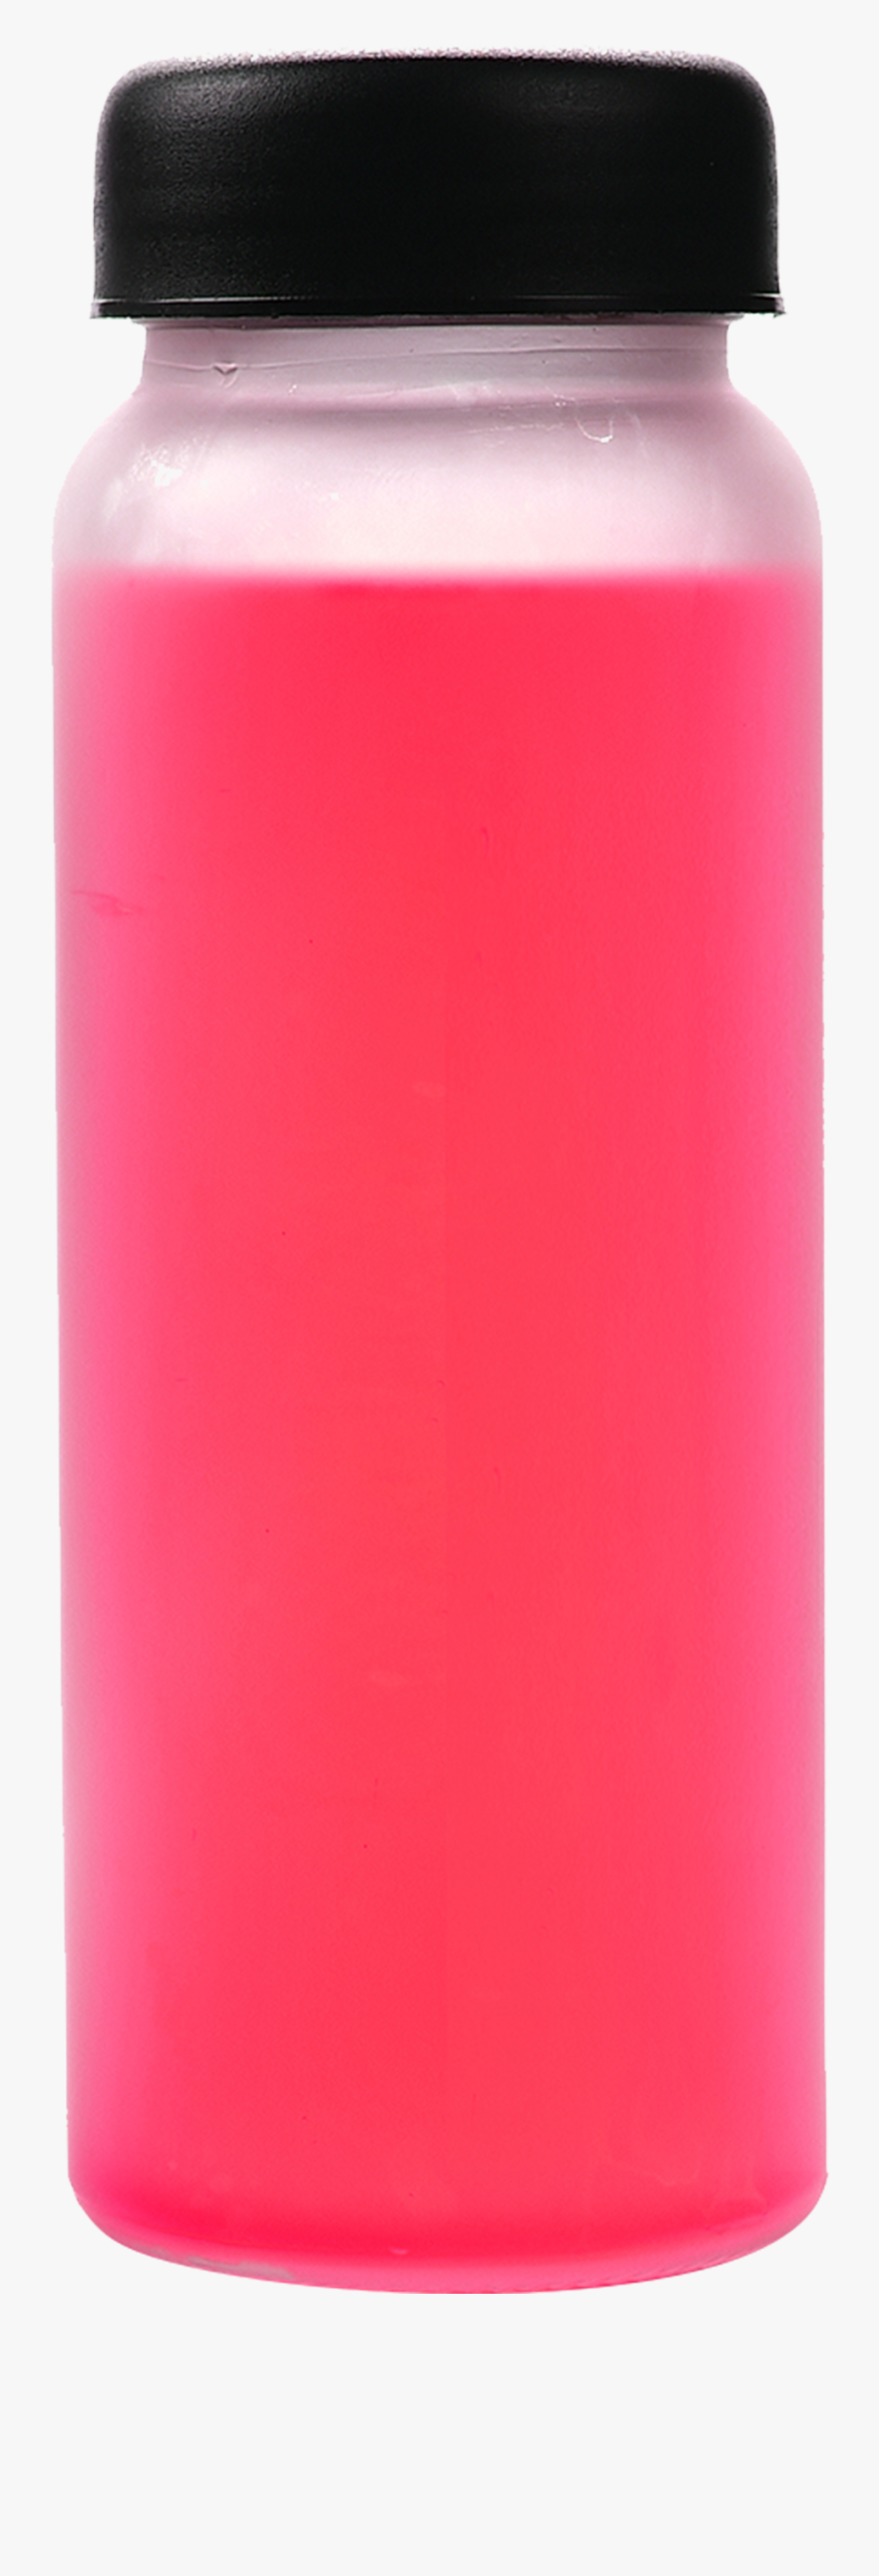 Clip Art Pink Mason Jars - Juice Glass Jar Png, Transparent Clipart